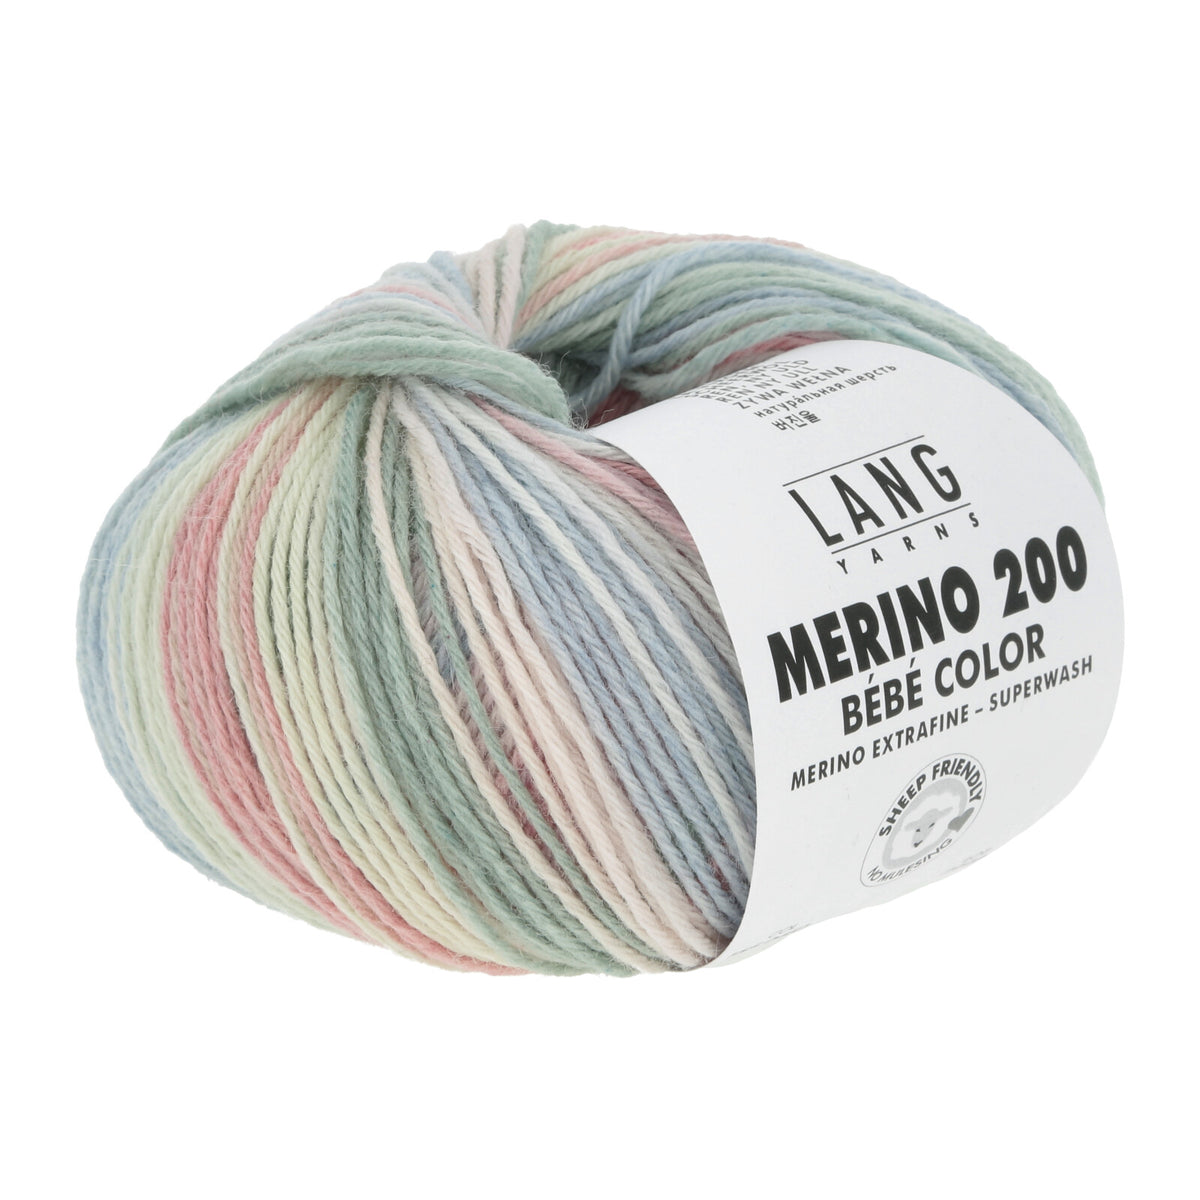 Lang Merino 200 Bebe Color